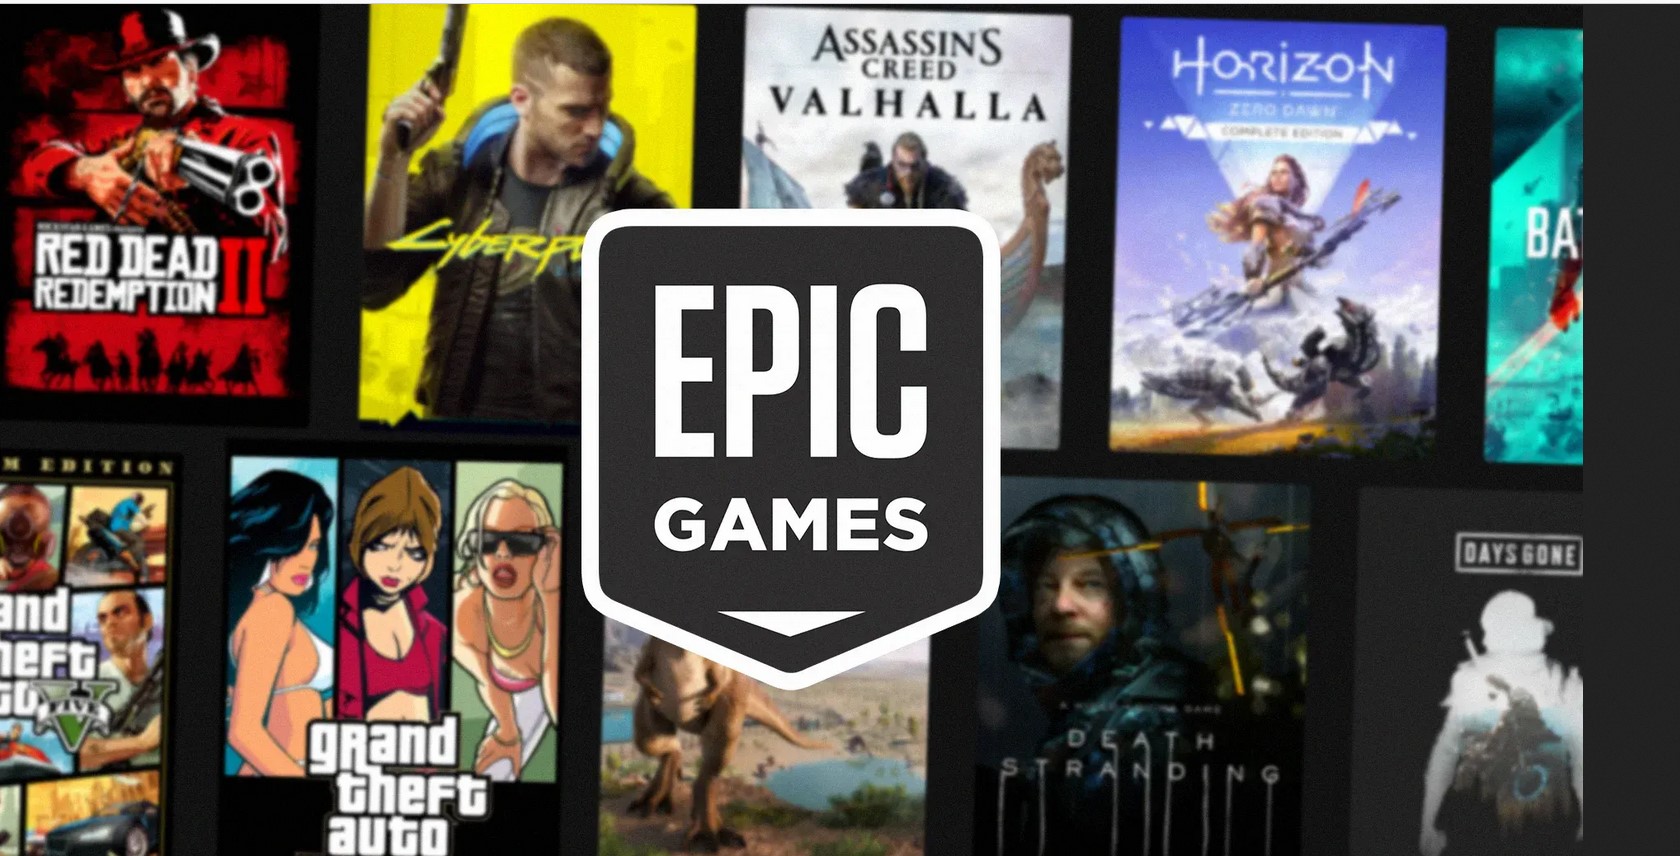 Epic Games Store solta jogos Jotun, Prey e Redout de graça - Drops de Jogos